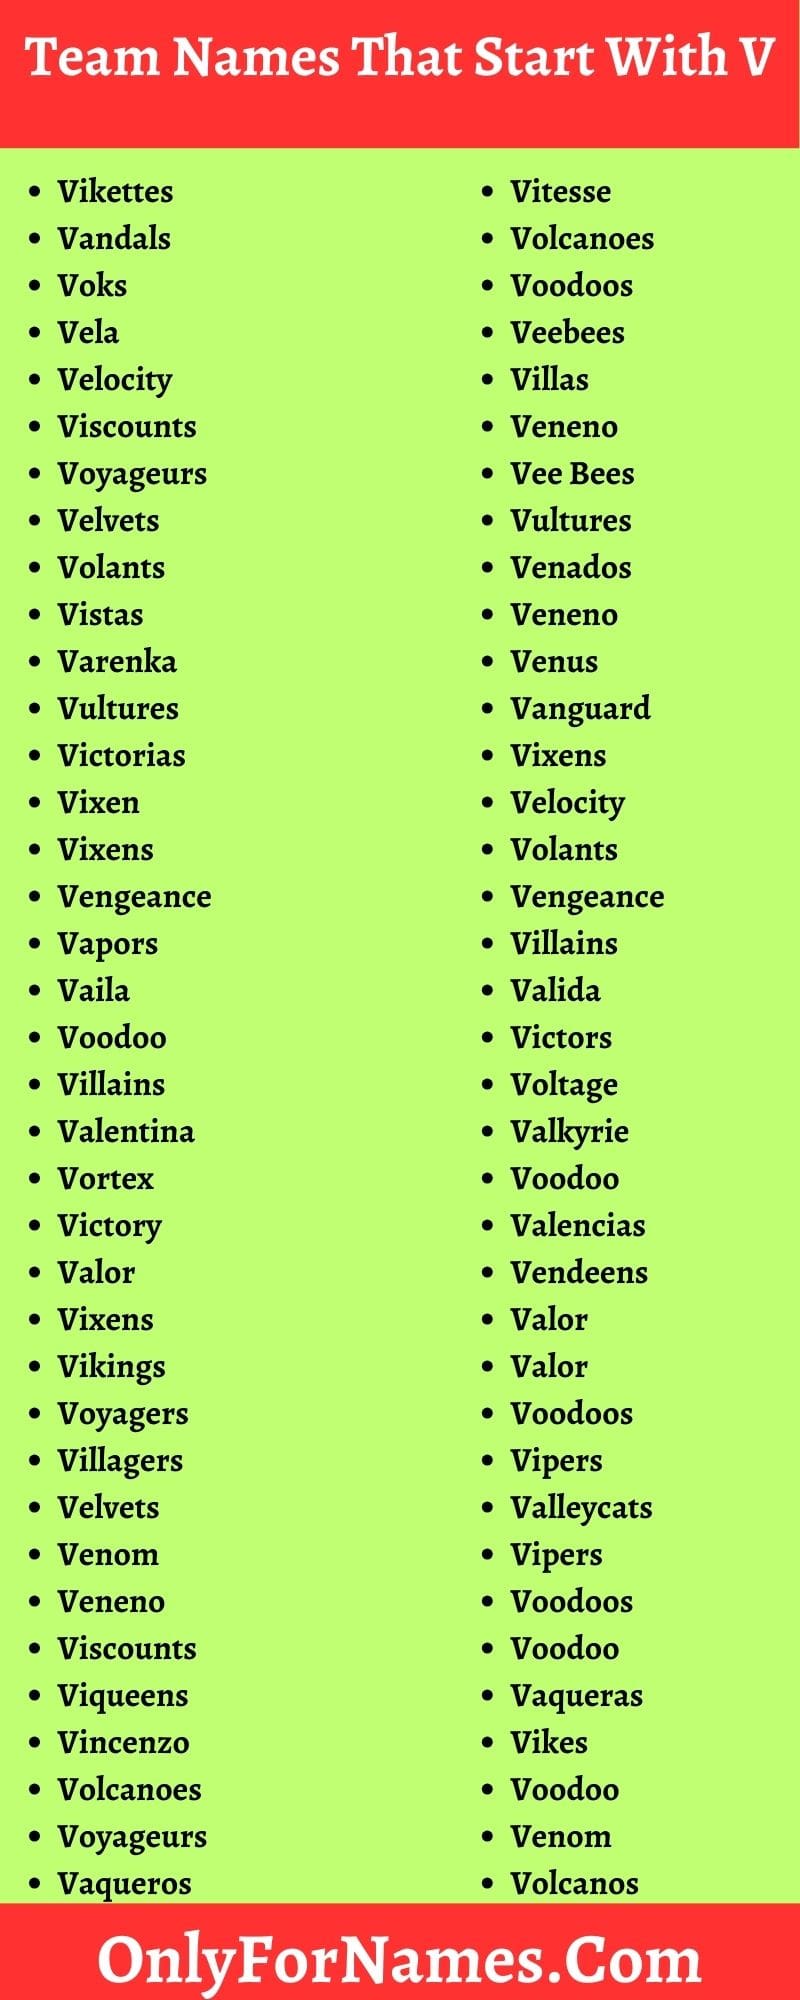 Team Names That Start With V